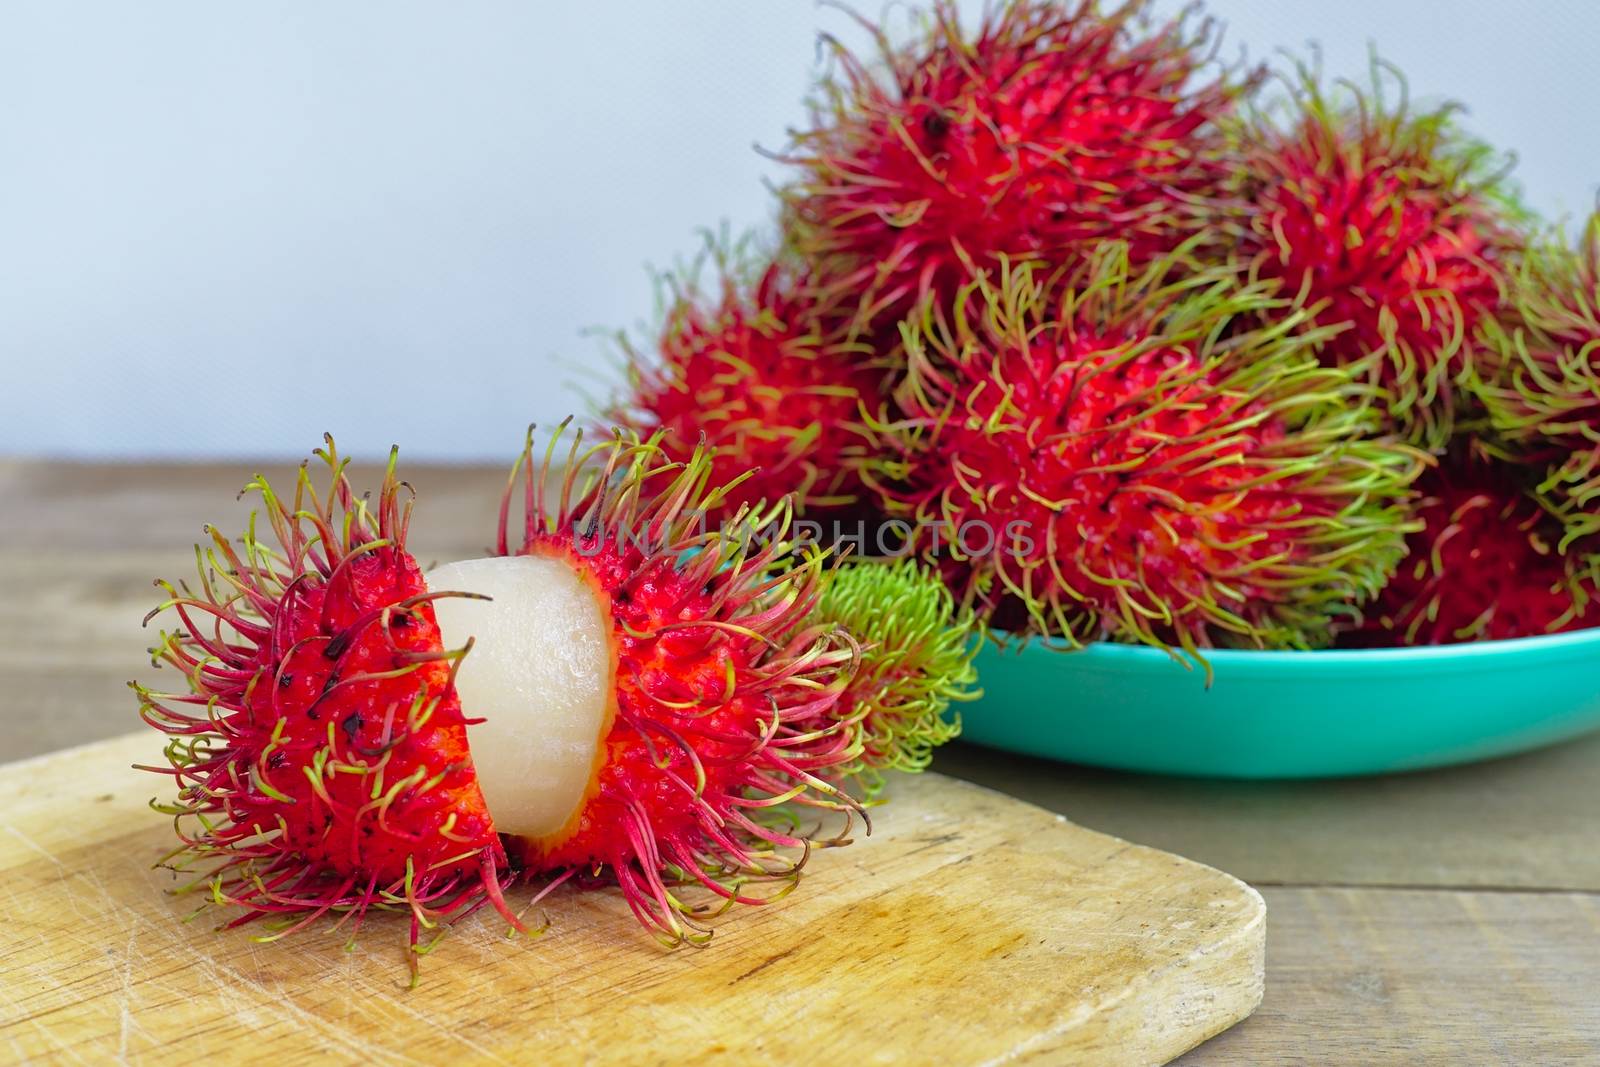 Exotic ripe rambutan fruits from Southeast Asia by Faeldin